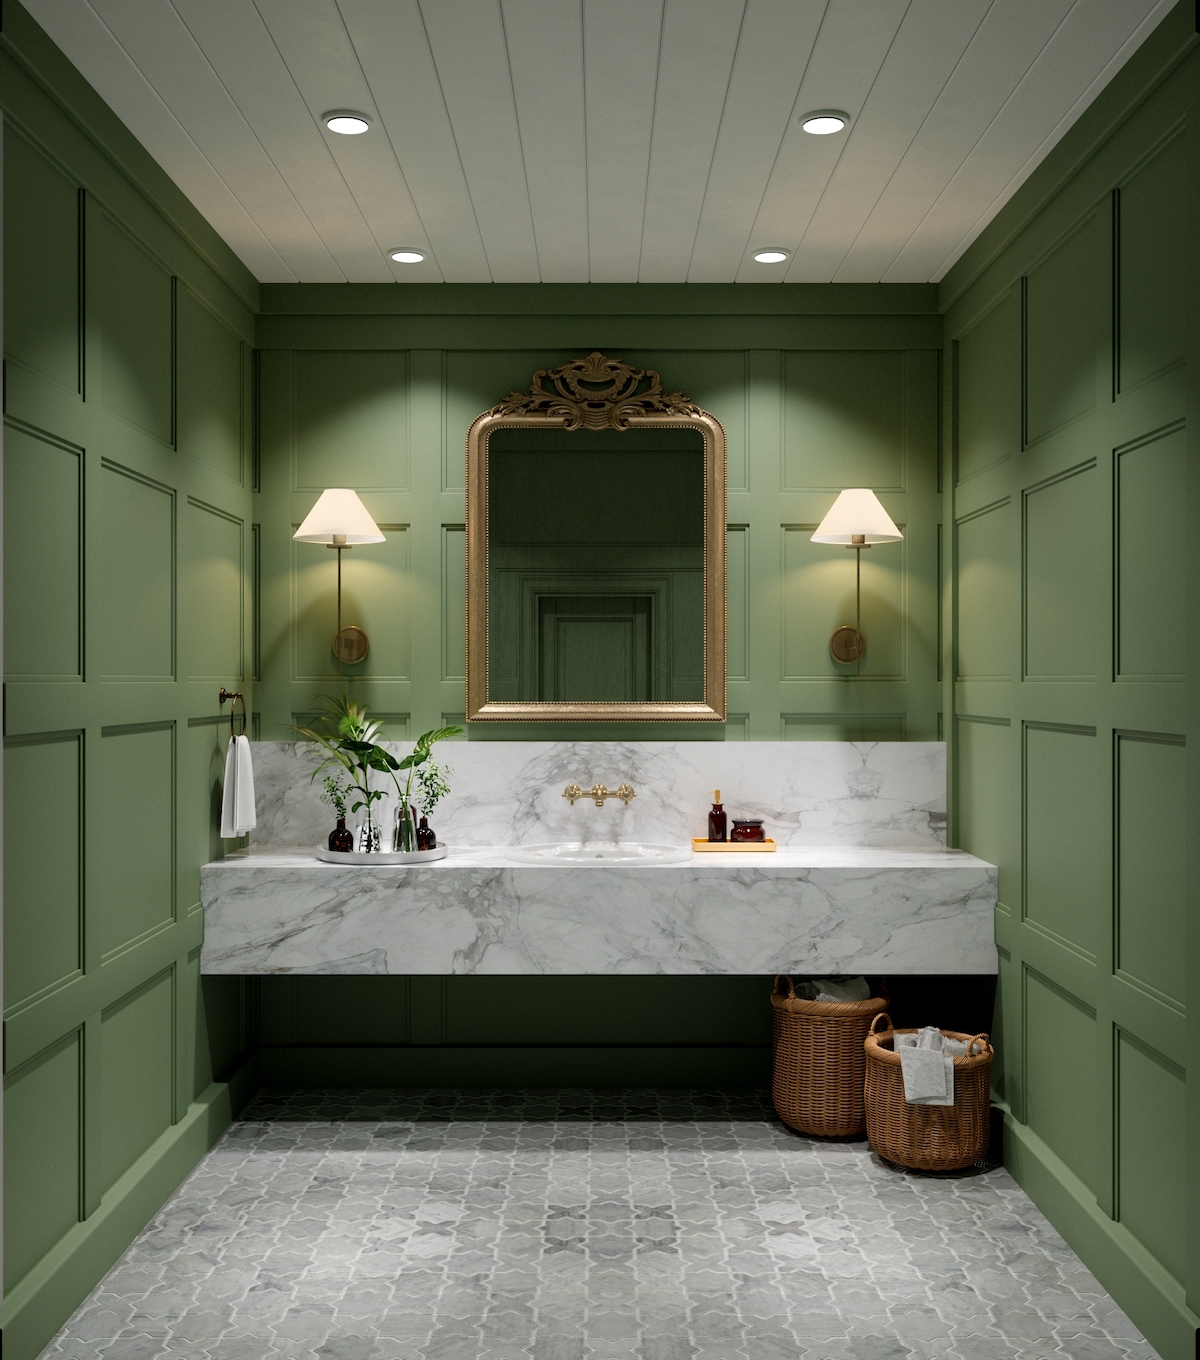 Green wood paneled walls, guest bathroom, marble countertops.